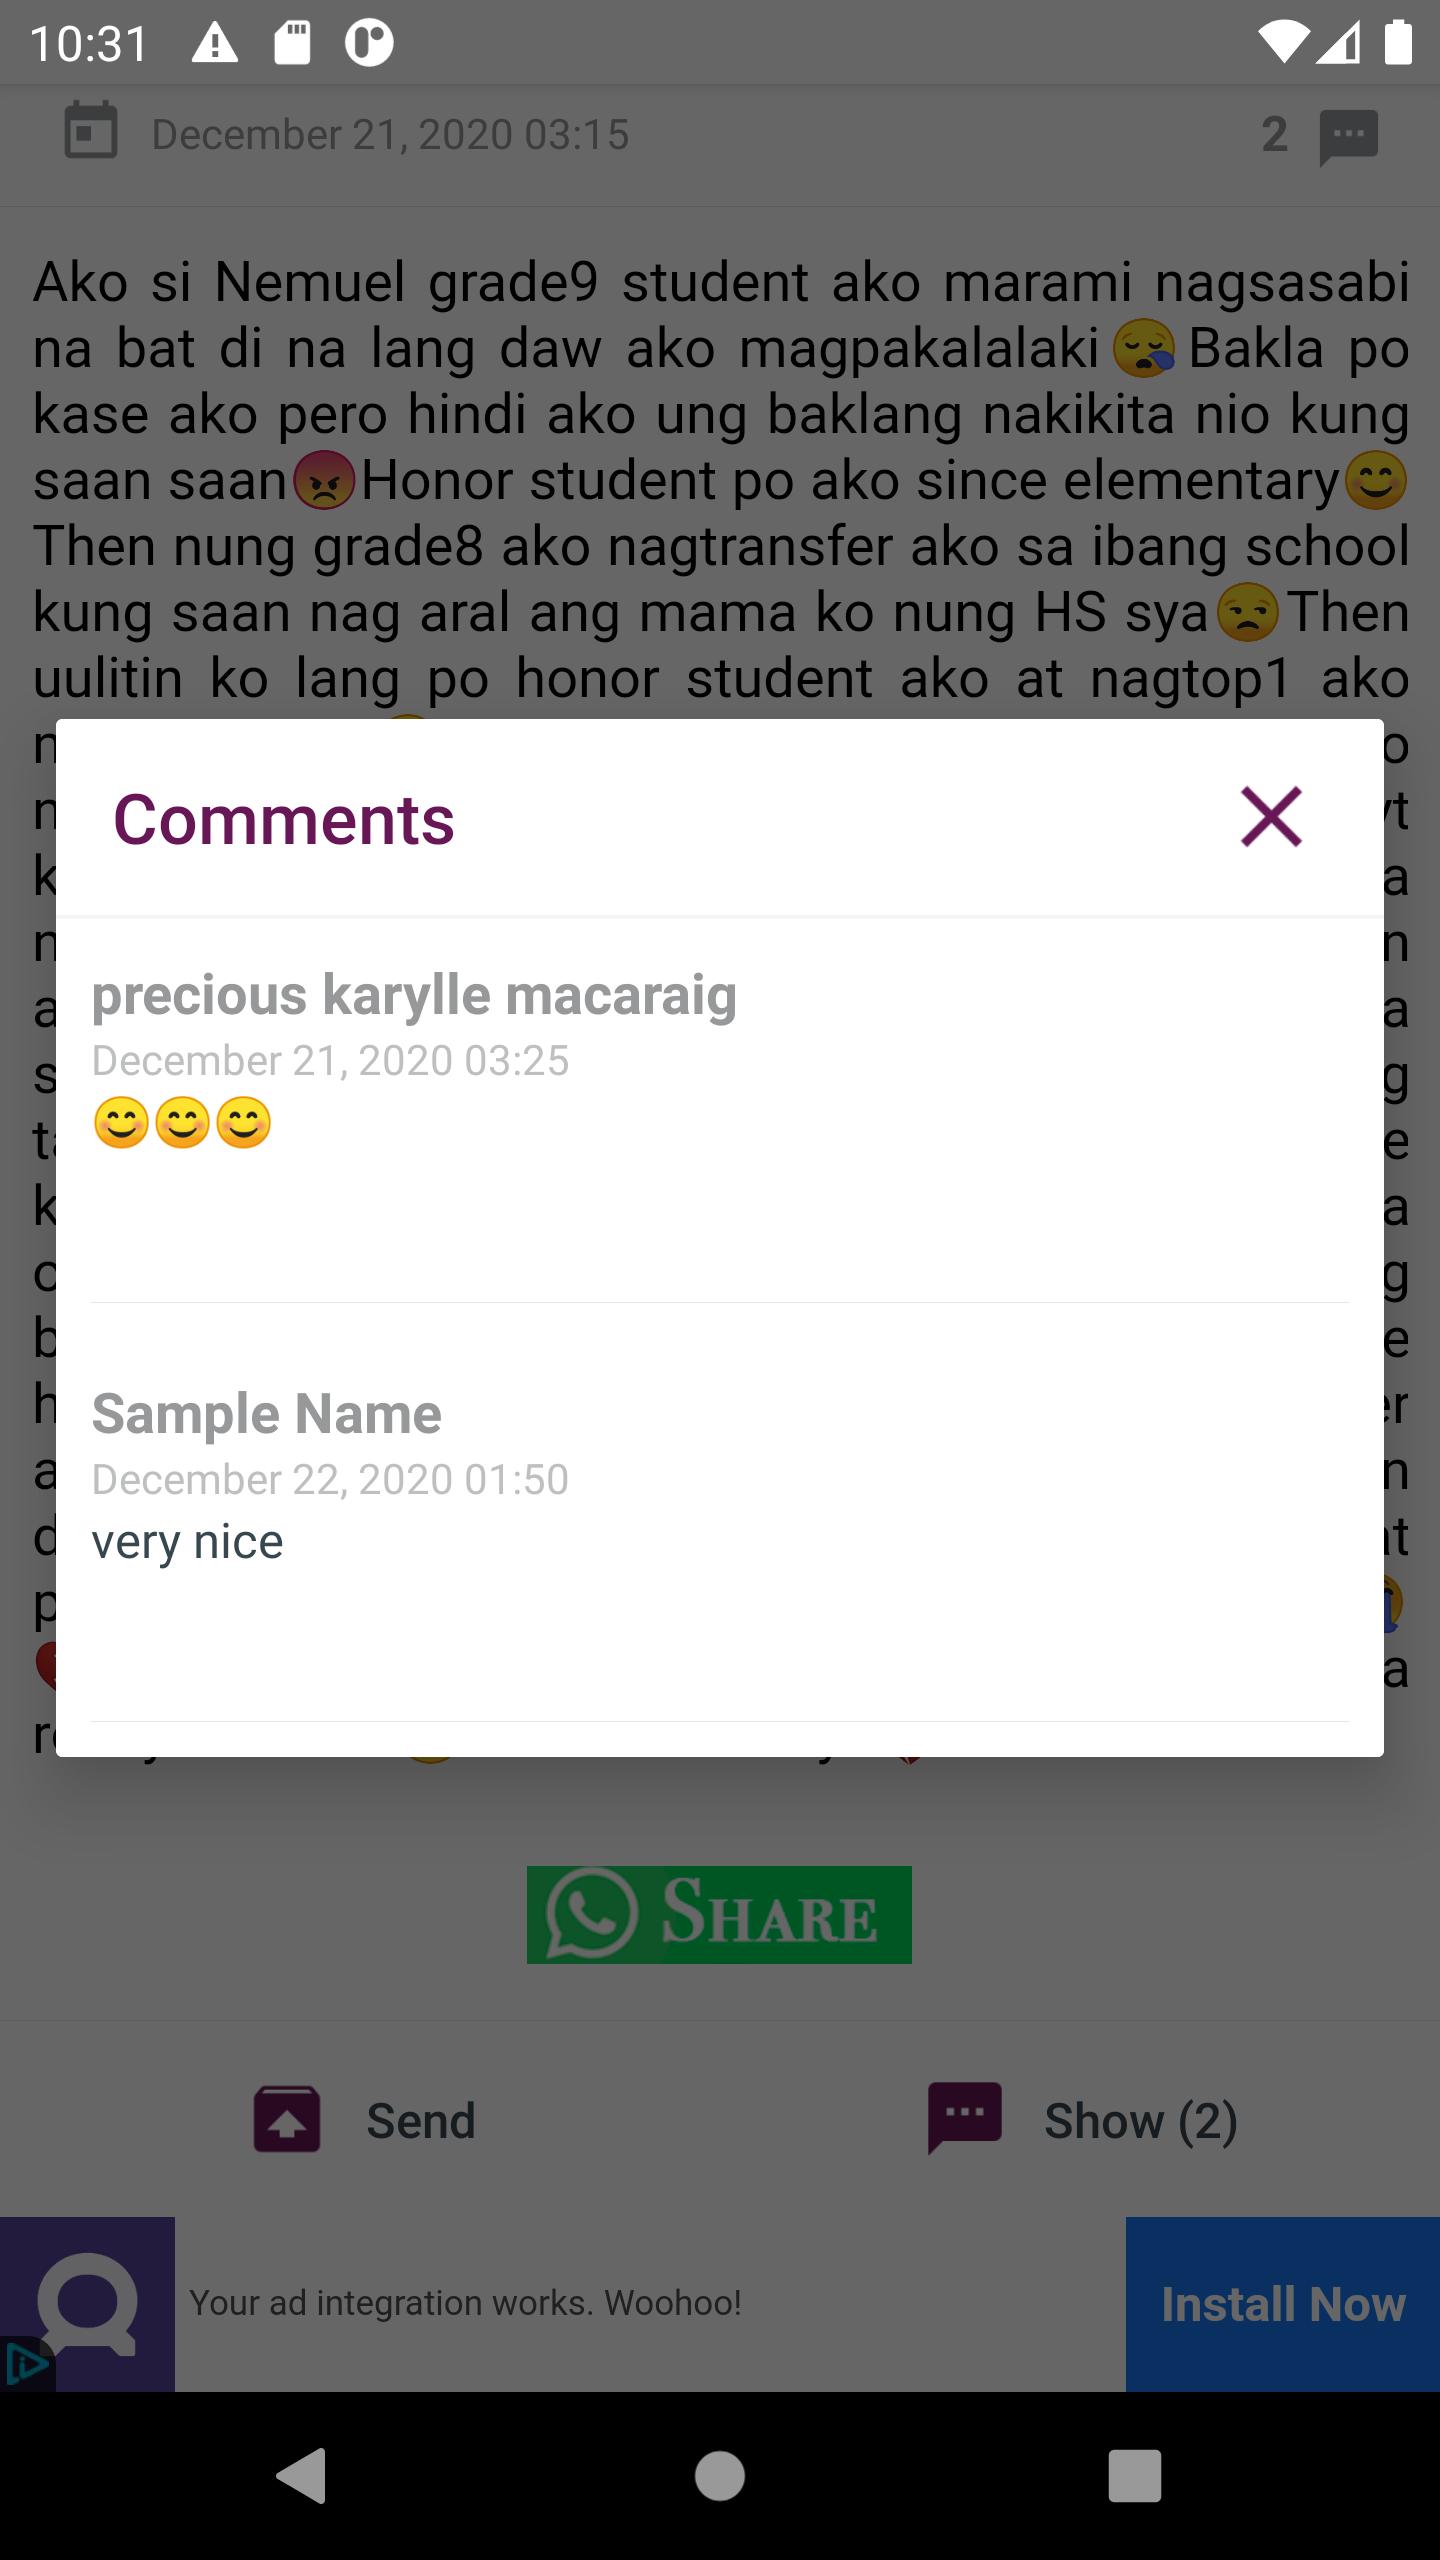 Tagalog Love Stories 2.1.7 Screenshot 16